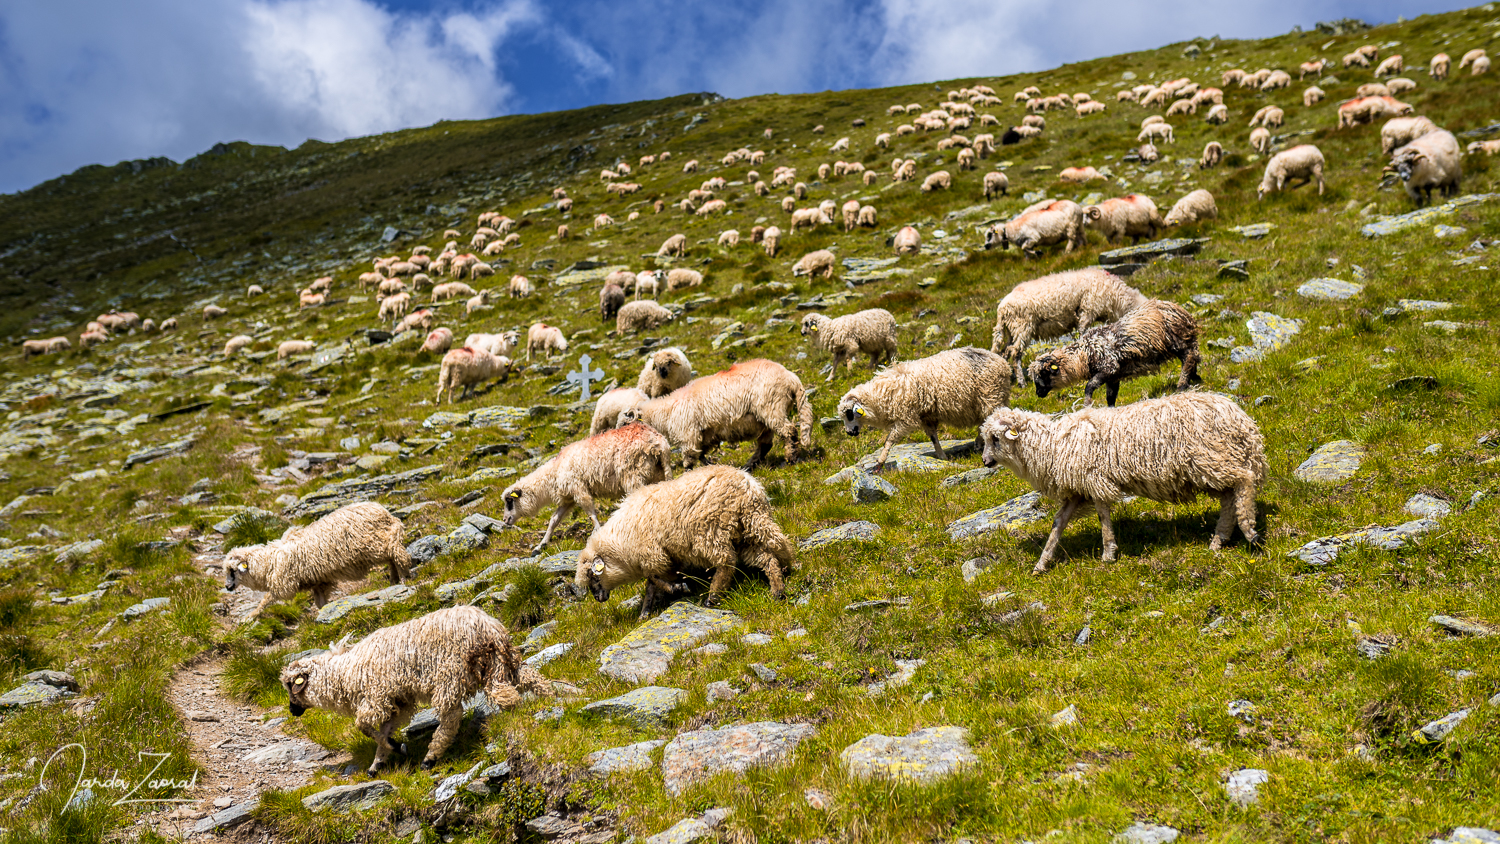 Sheep in Romanian mountains